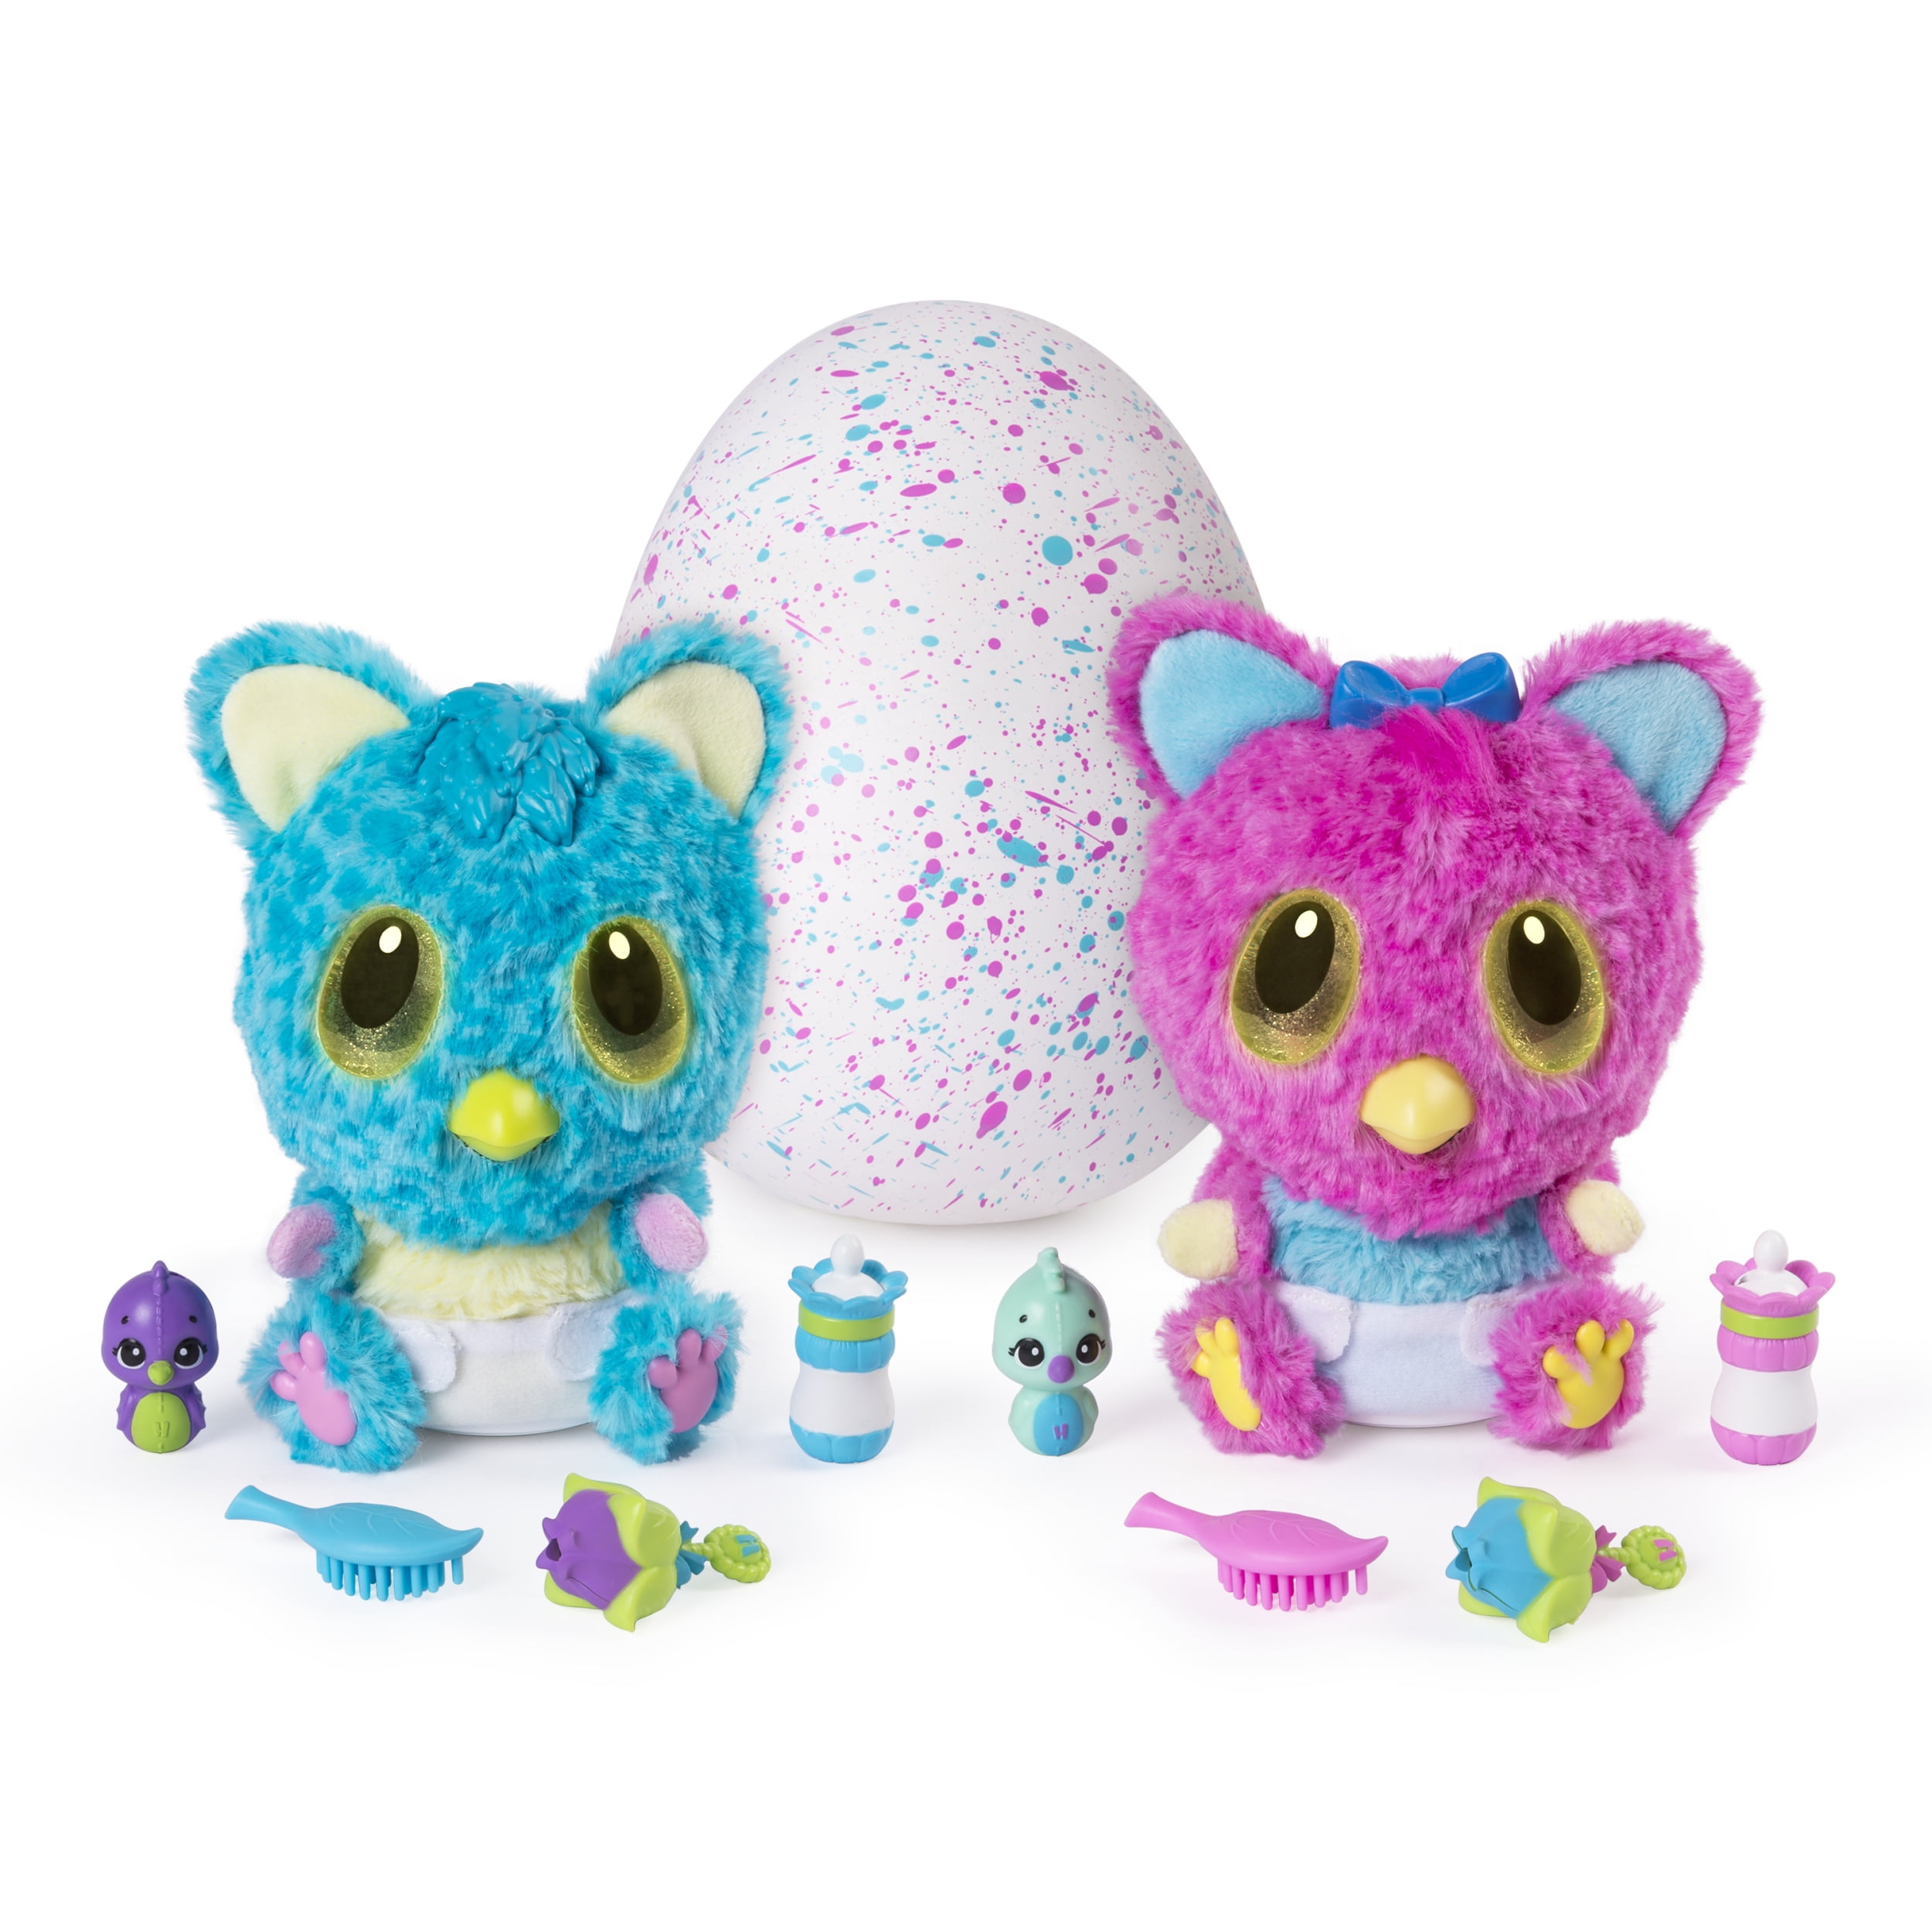 6046467 Hatchimals HatchiBabies Surprise Egg with Interactive Pet for sale online 